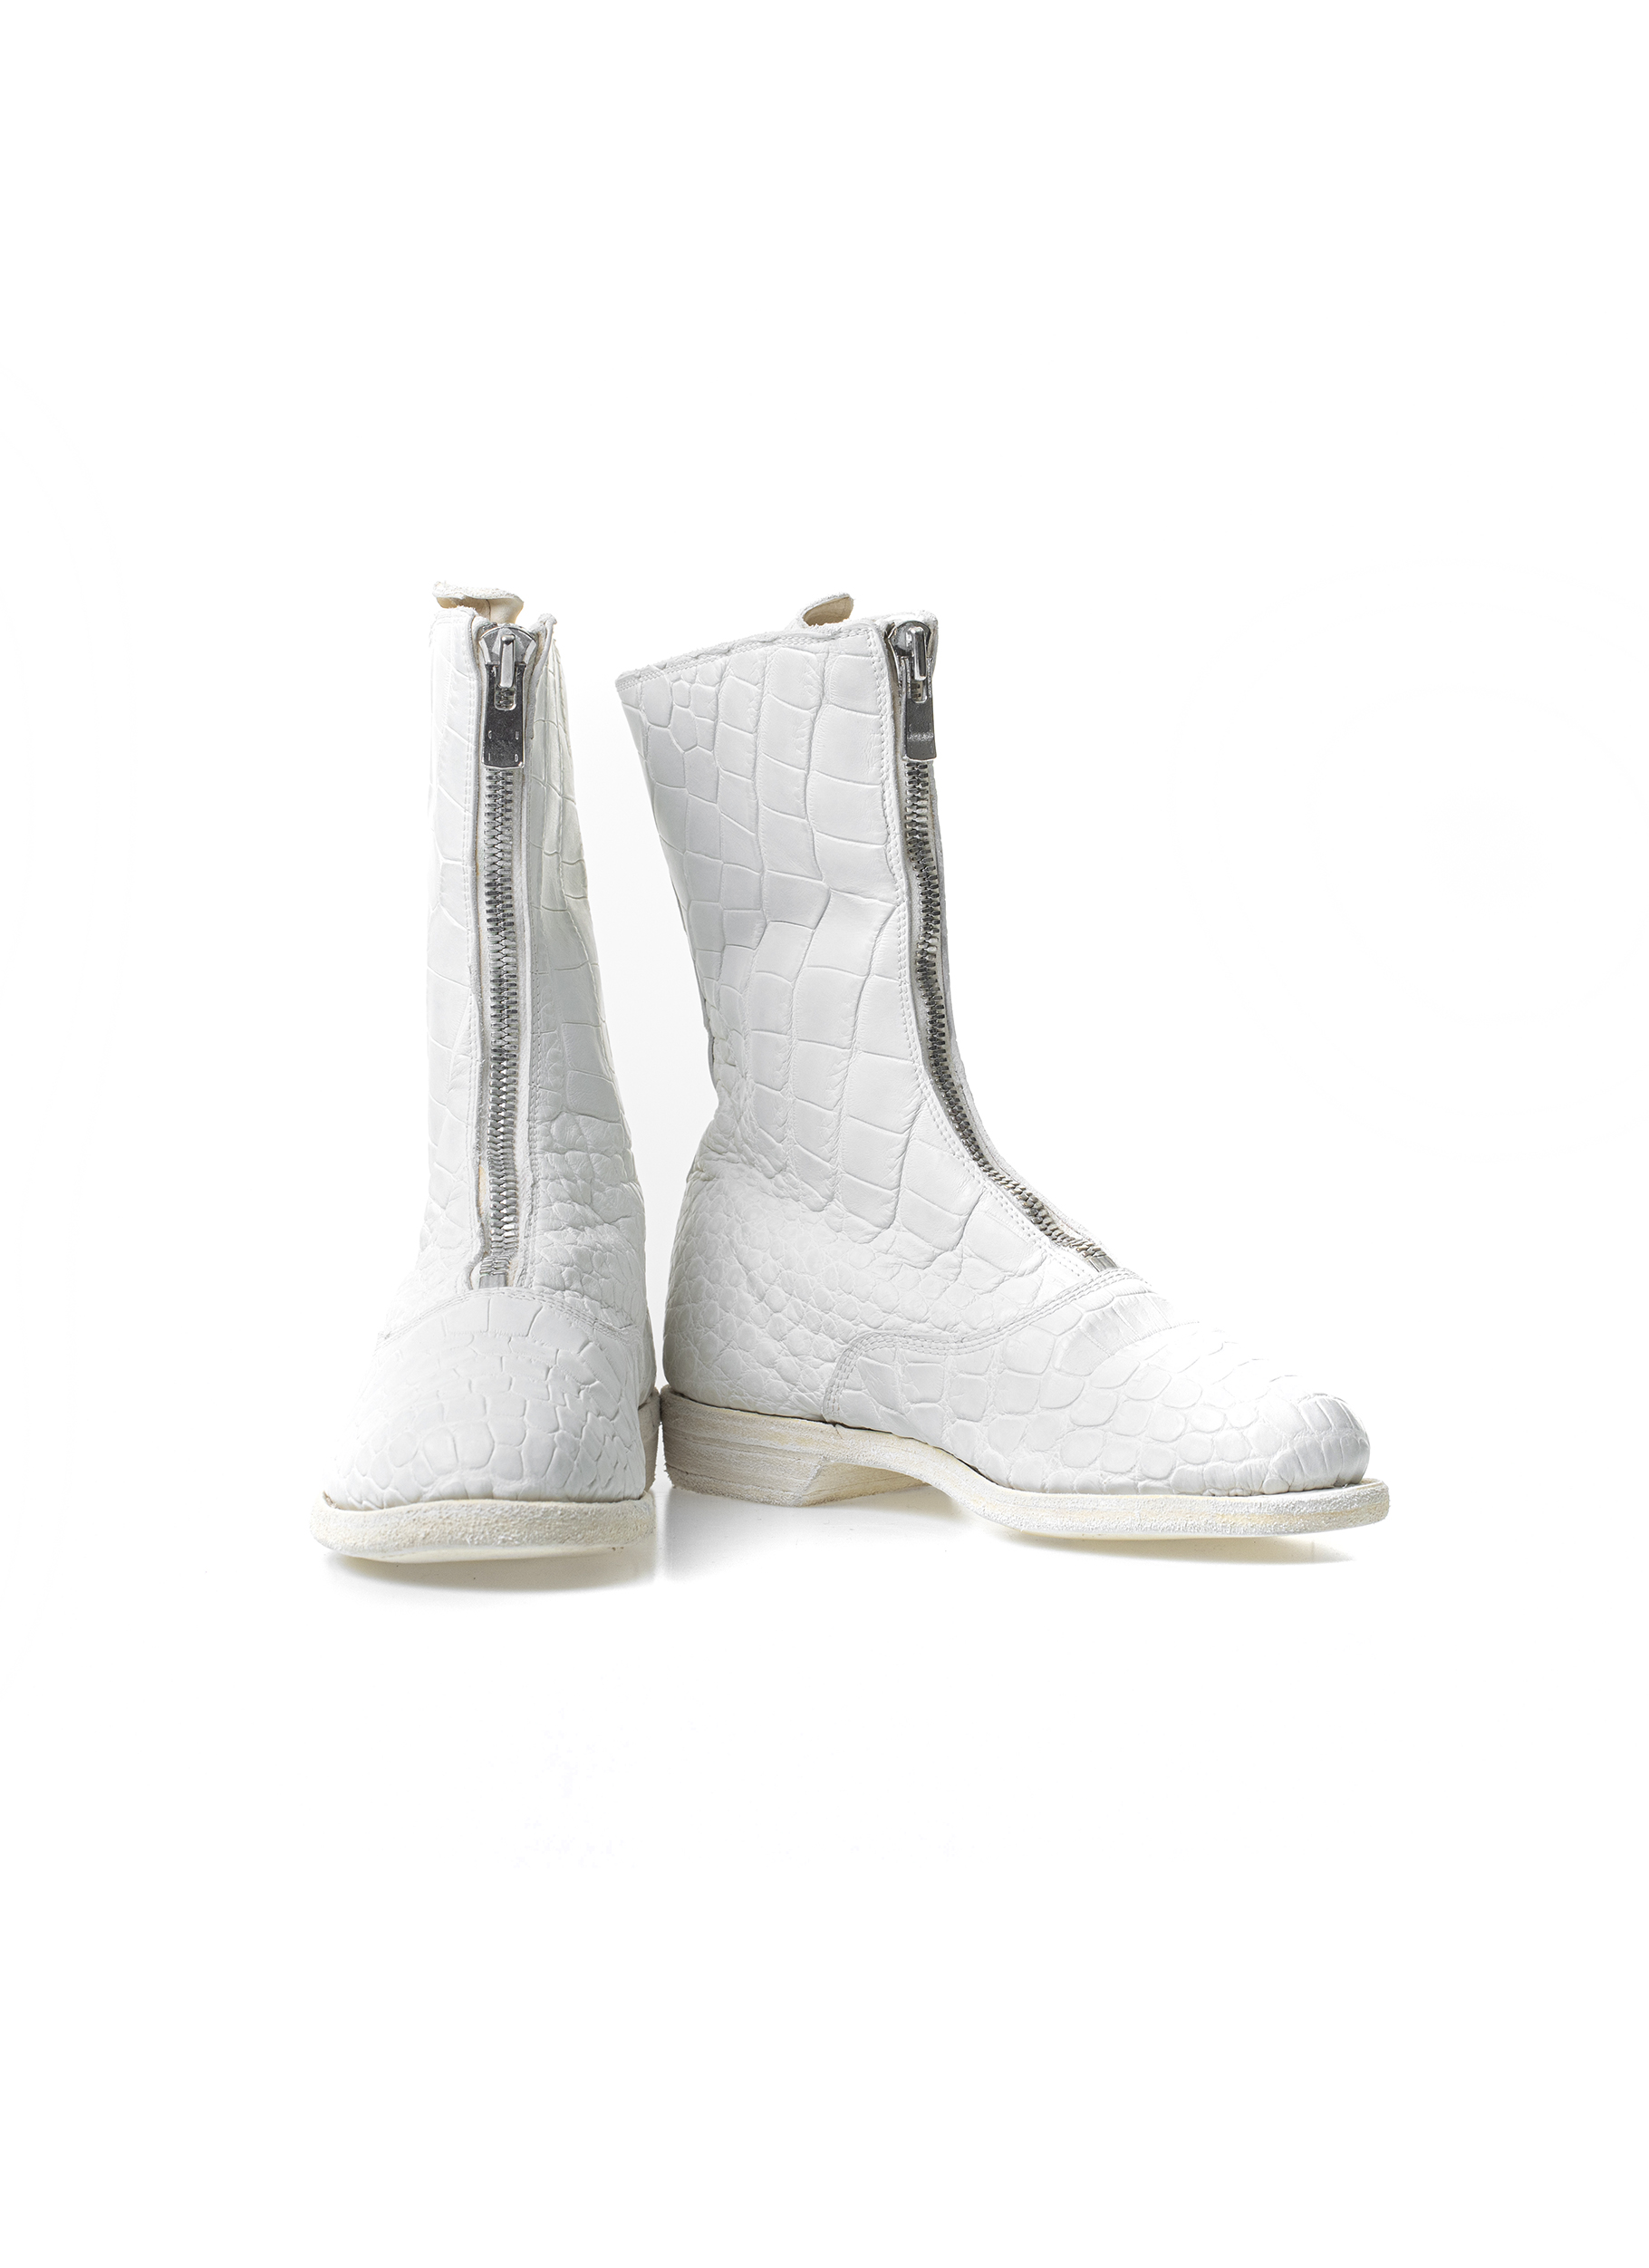 hide-m | GUIDI 310, Front Zip Army Boot, white crocodile leather